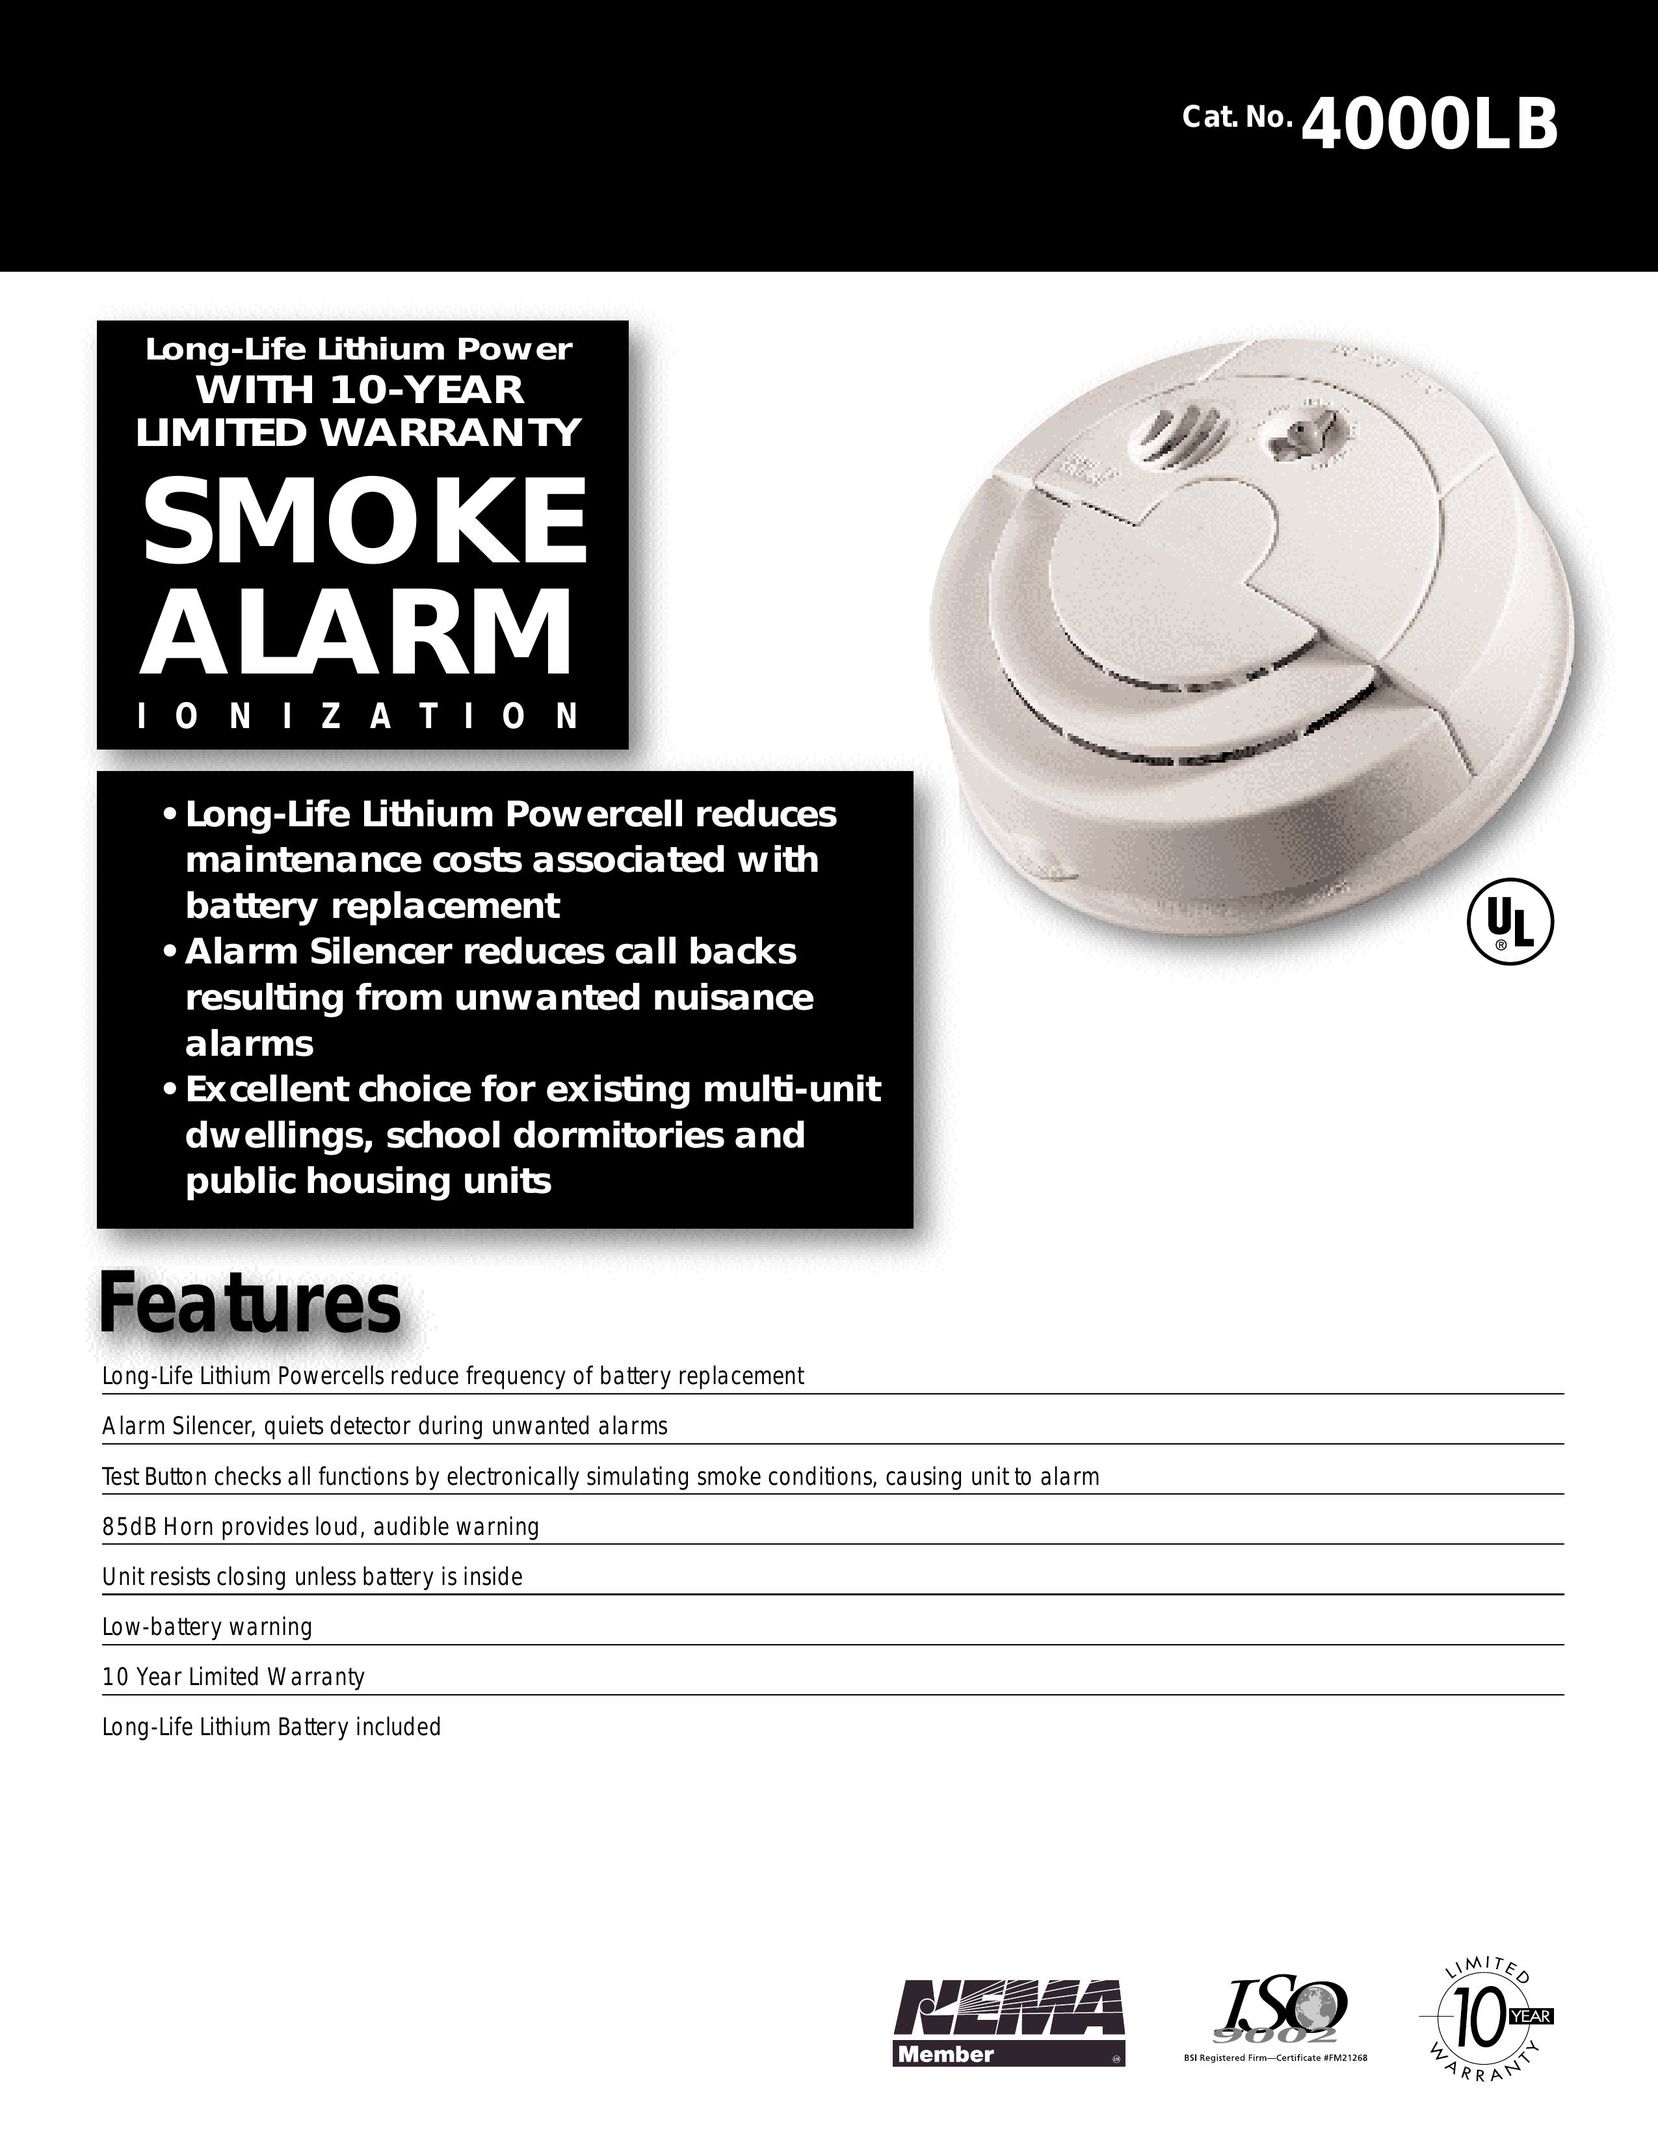 BRK electronic 4000LB Smoke Alarm User Manual